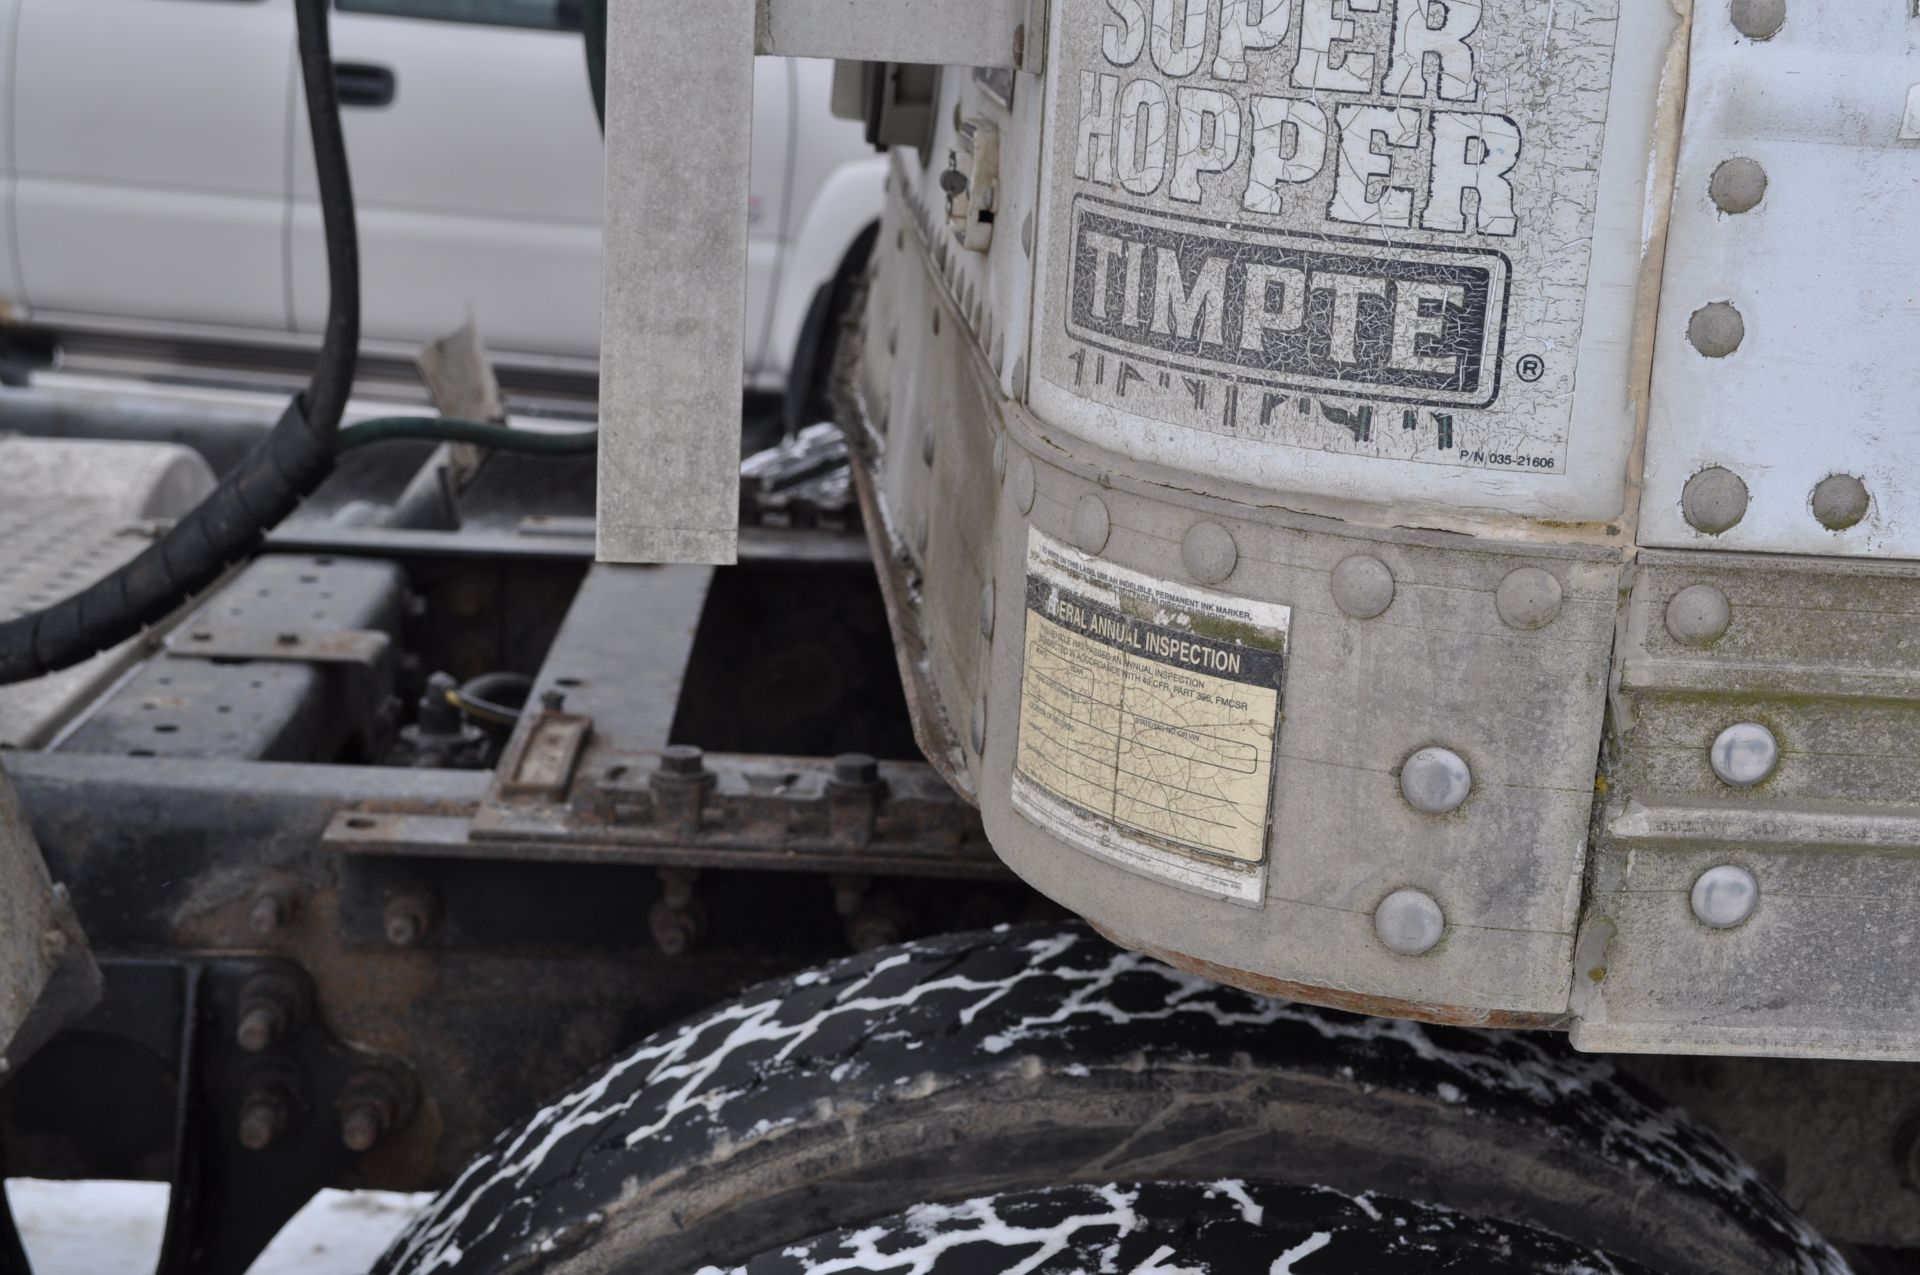 1993 42’ Timpte hopper bottom trailer, spring ride, 11R24.5 tires, roll tarp, VIN H42221PB084815 - Image 6 of 19